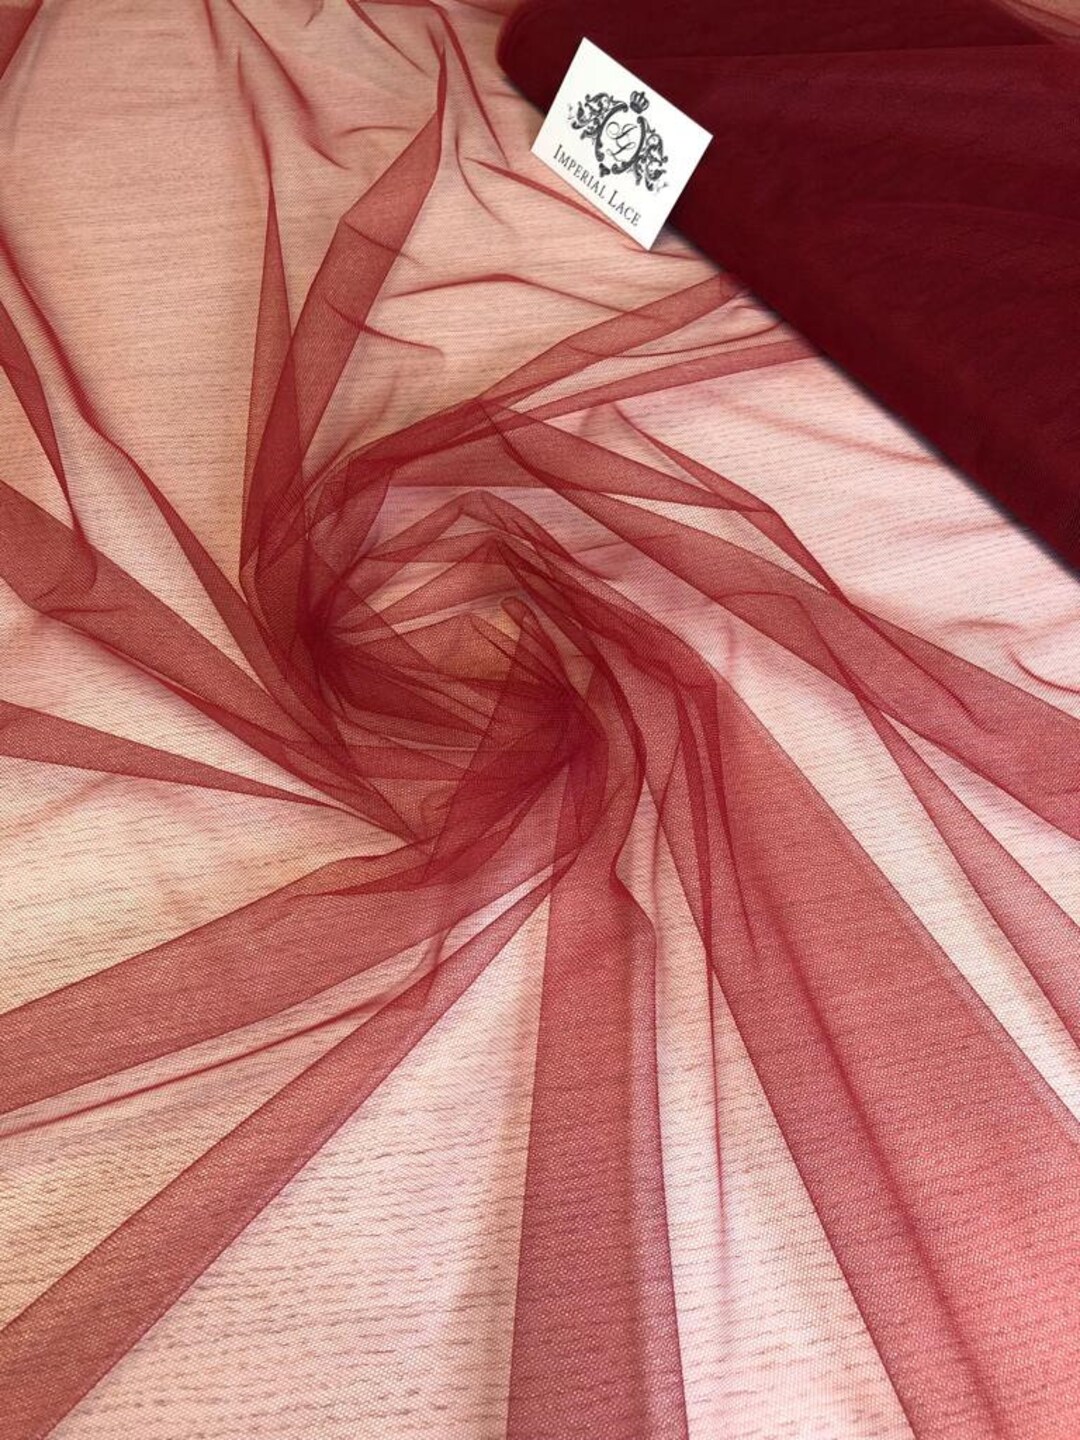 Red Tulle Fabric  OnlineFabricStore